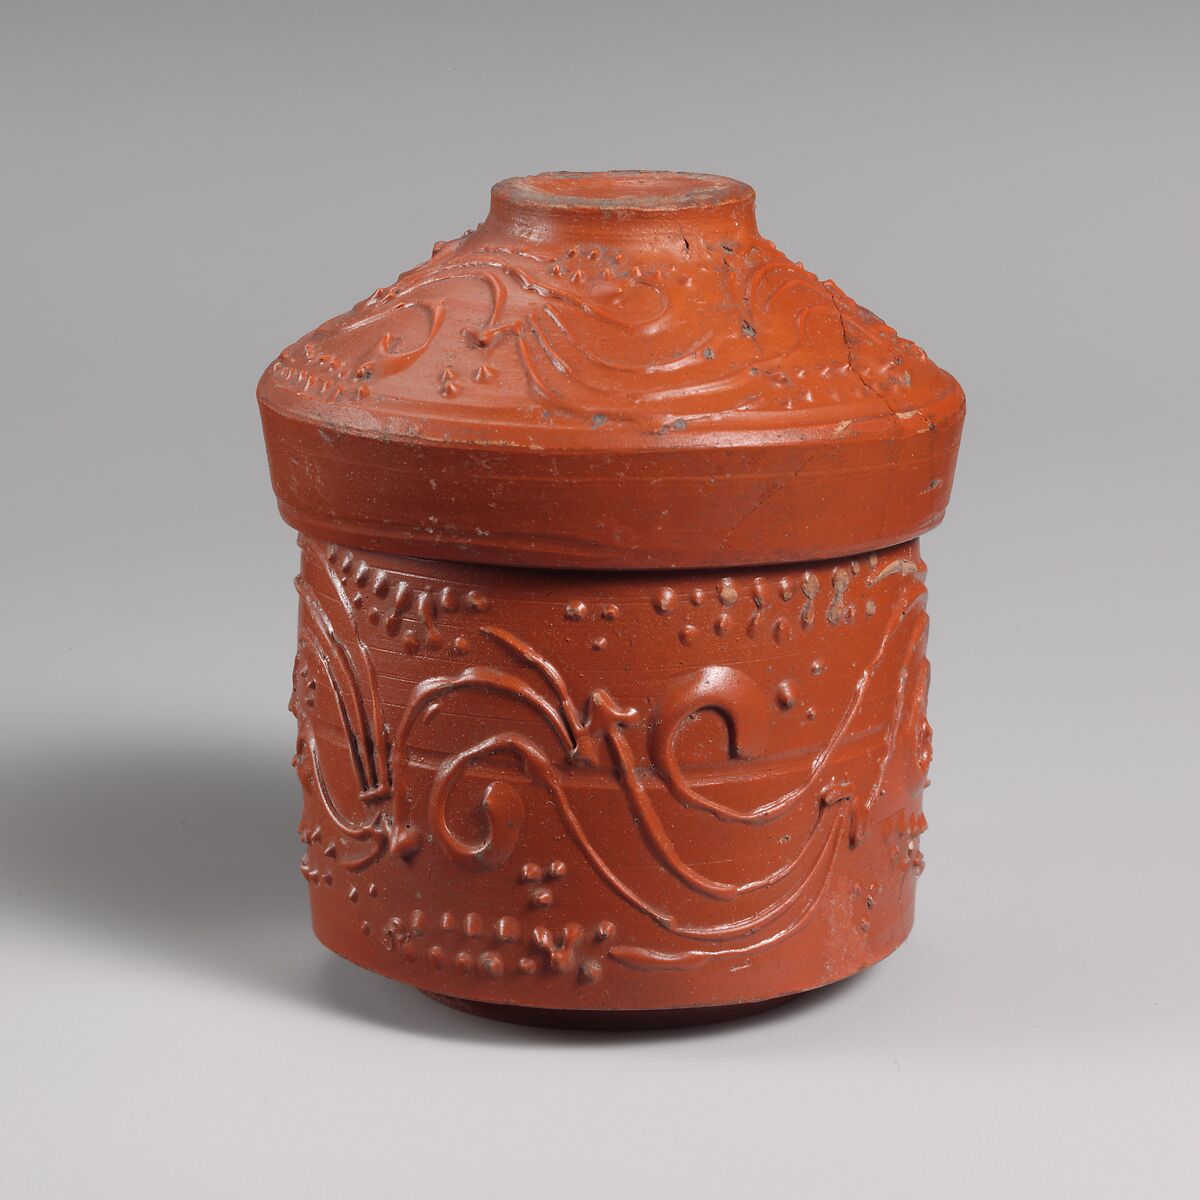 Terracotta pyxis (box) with lid, Terracotta, Roman 